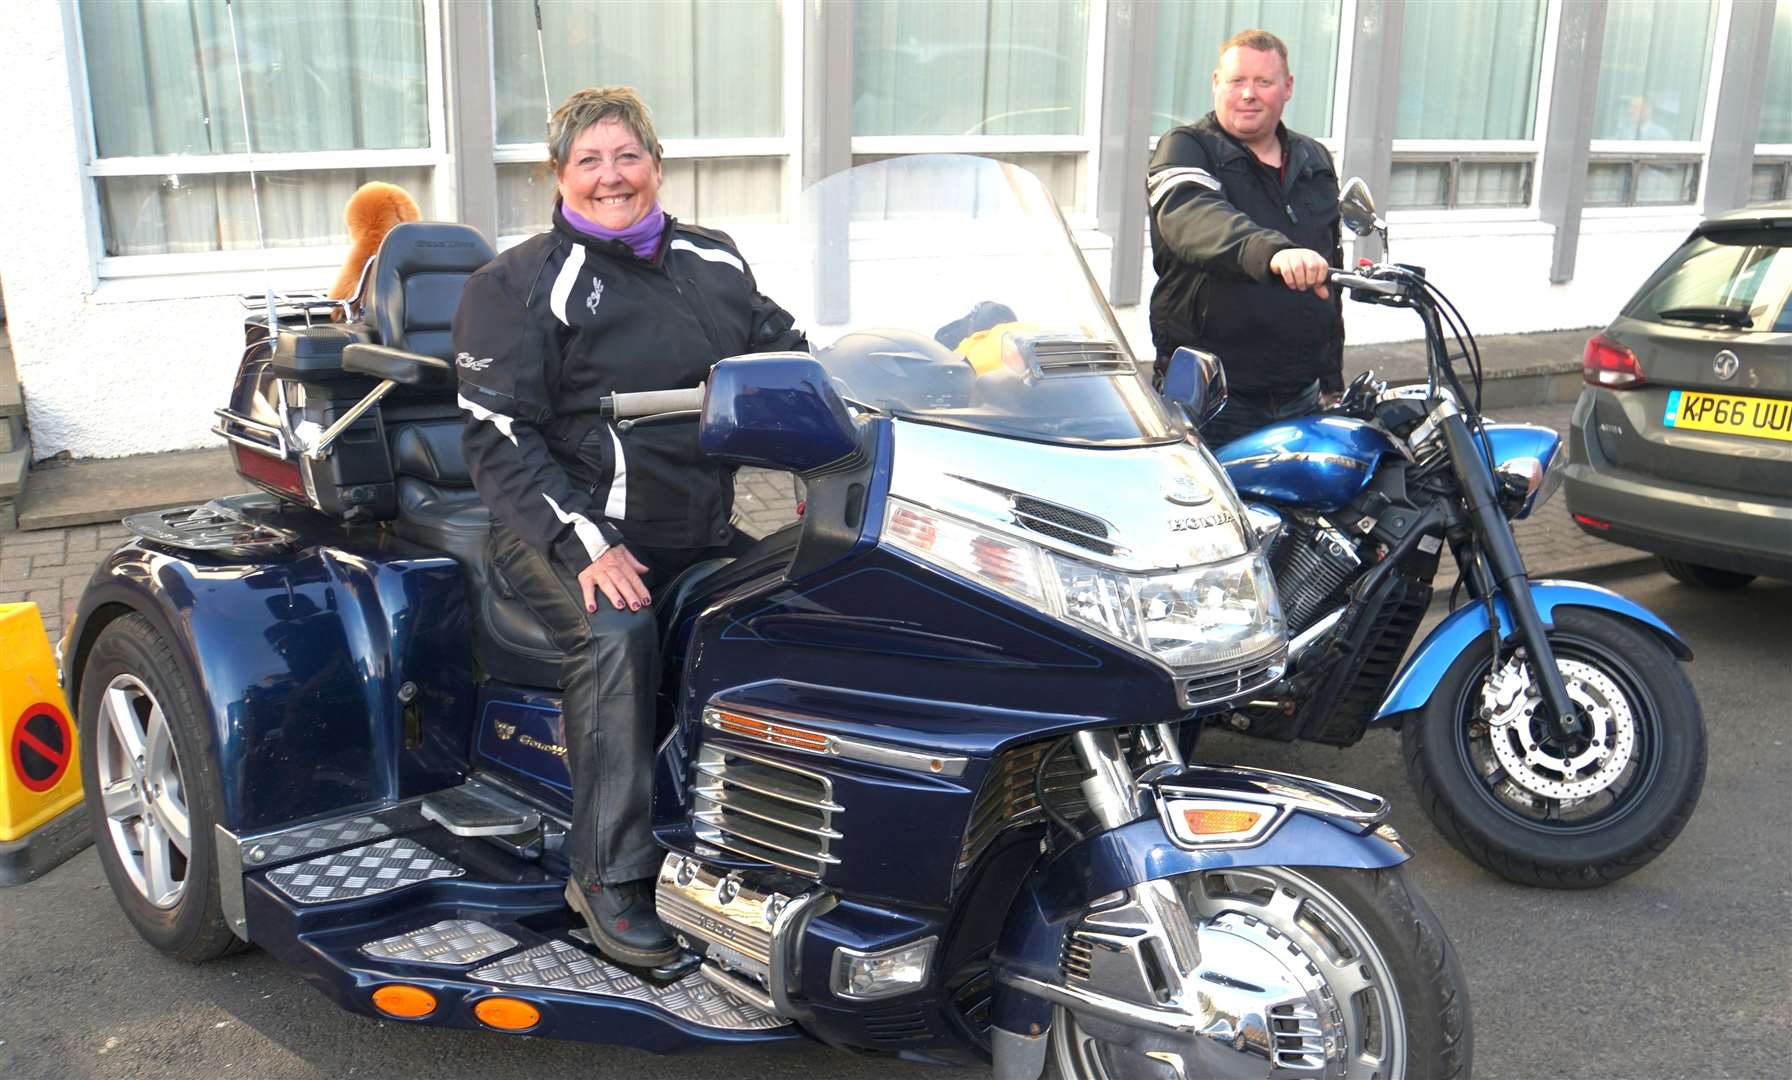 Linda Gallon's enormous Honda trike dwarfs her son on his Yamaha.